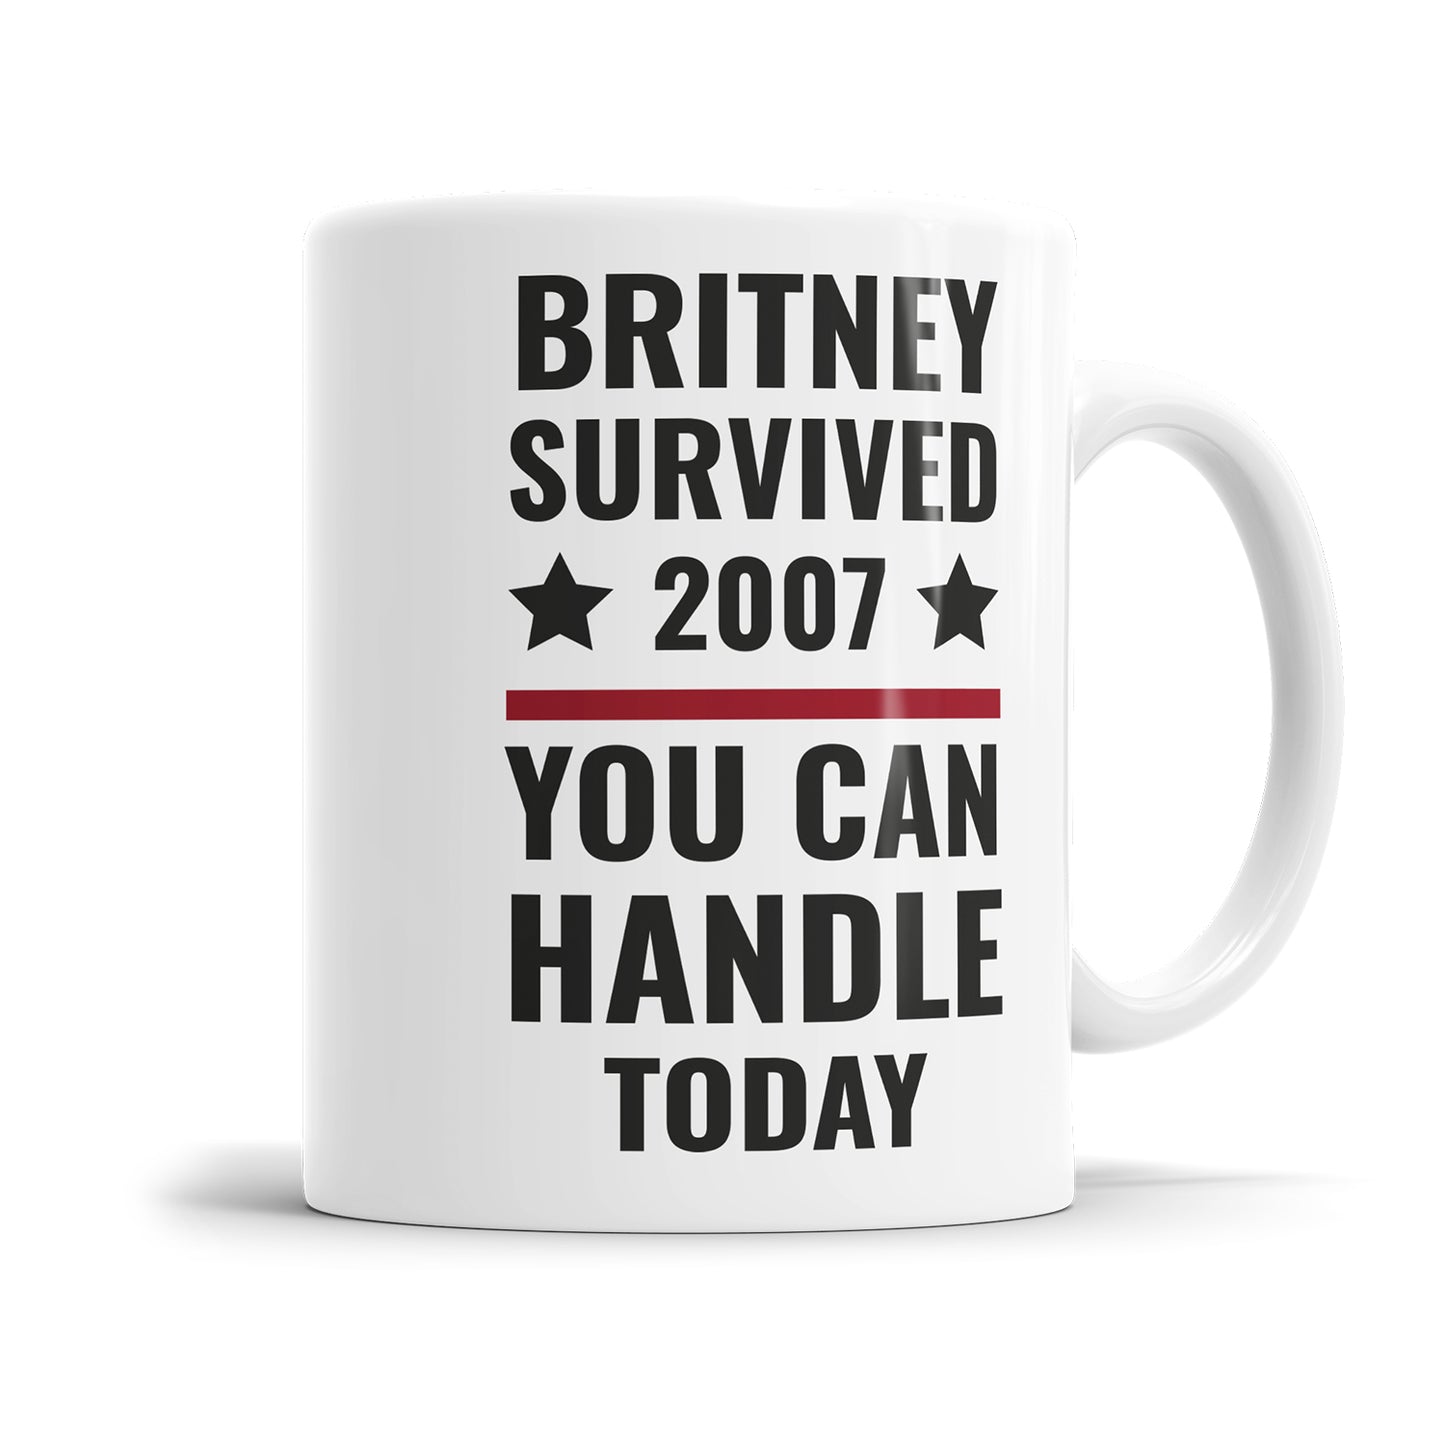 Britney survived 2007 you can handle today - Sprüche Tasse